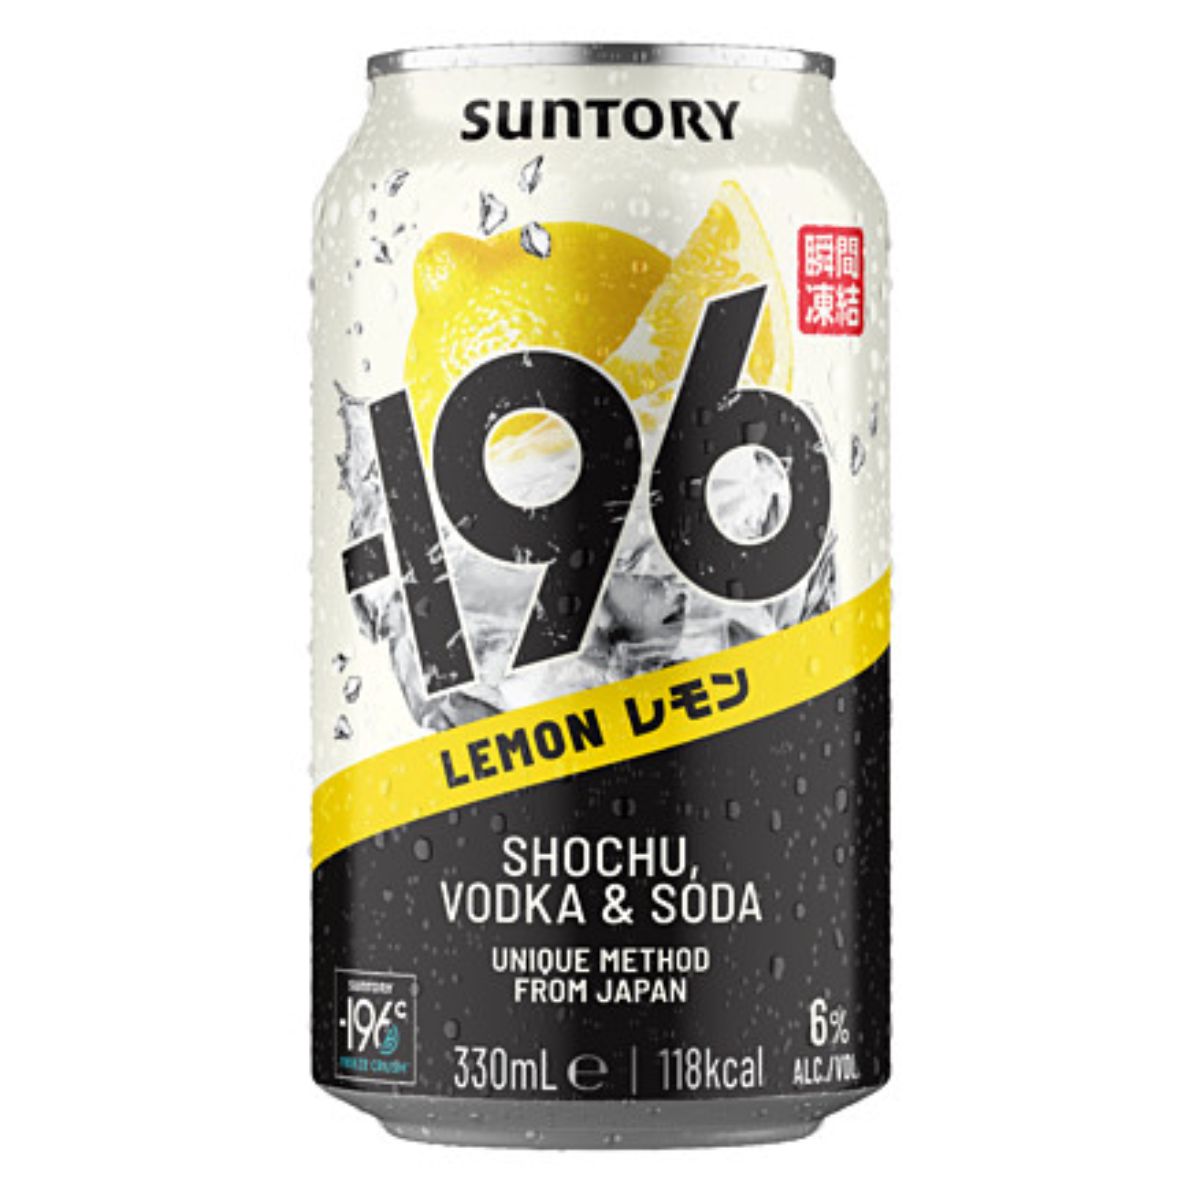 A -196 - Lemon Shochu Vodka Soda (9% ABV) - 330ml with water drops and a lemon.